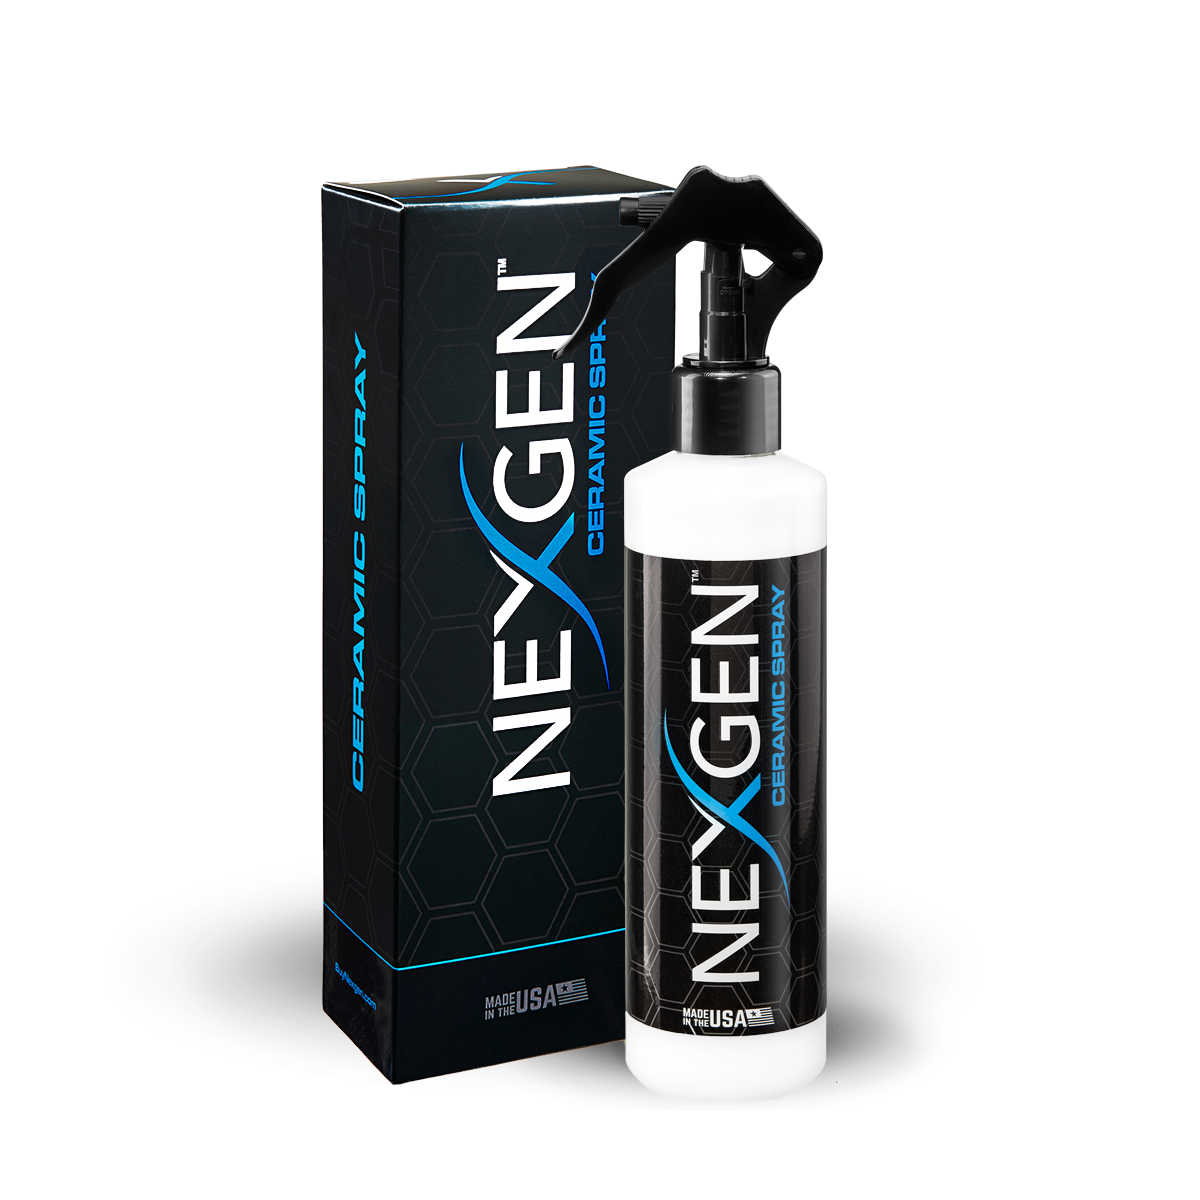 Nexgen Ceramic Spray Silicon Dioxide - Easy to Apply, Ceramic Coating Spray for Cars - Professional-Grade Protective Sealant Pol